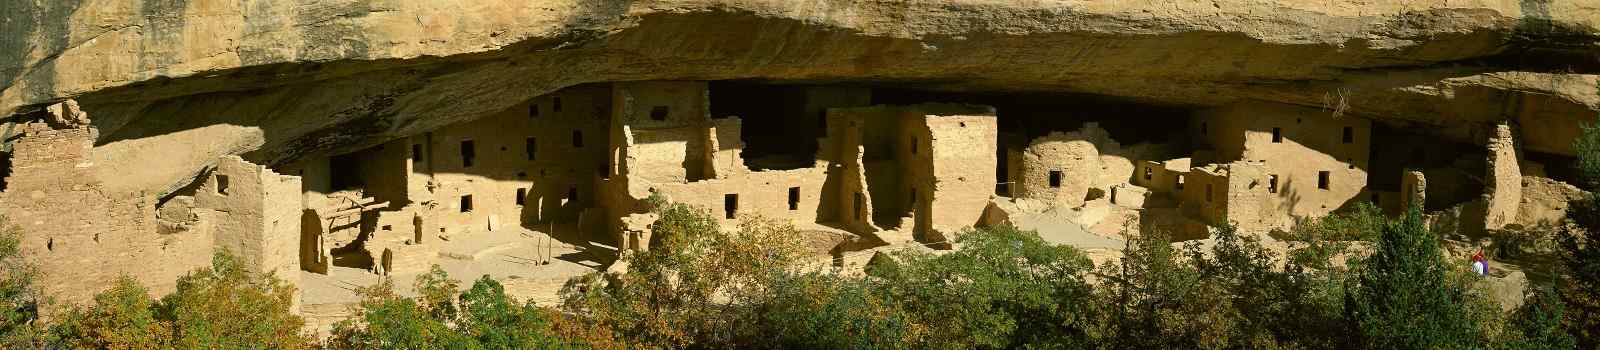 KULT-INDIANER  USA NP Mesa Verde National Park Panorama 105130127